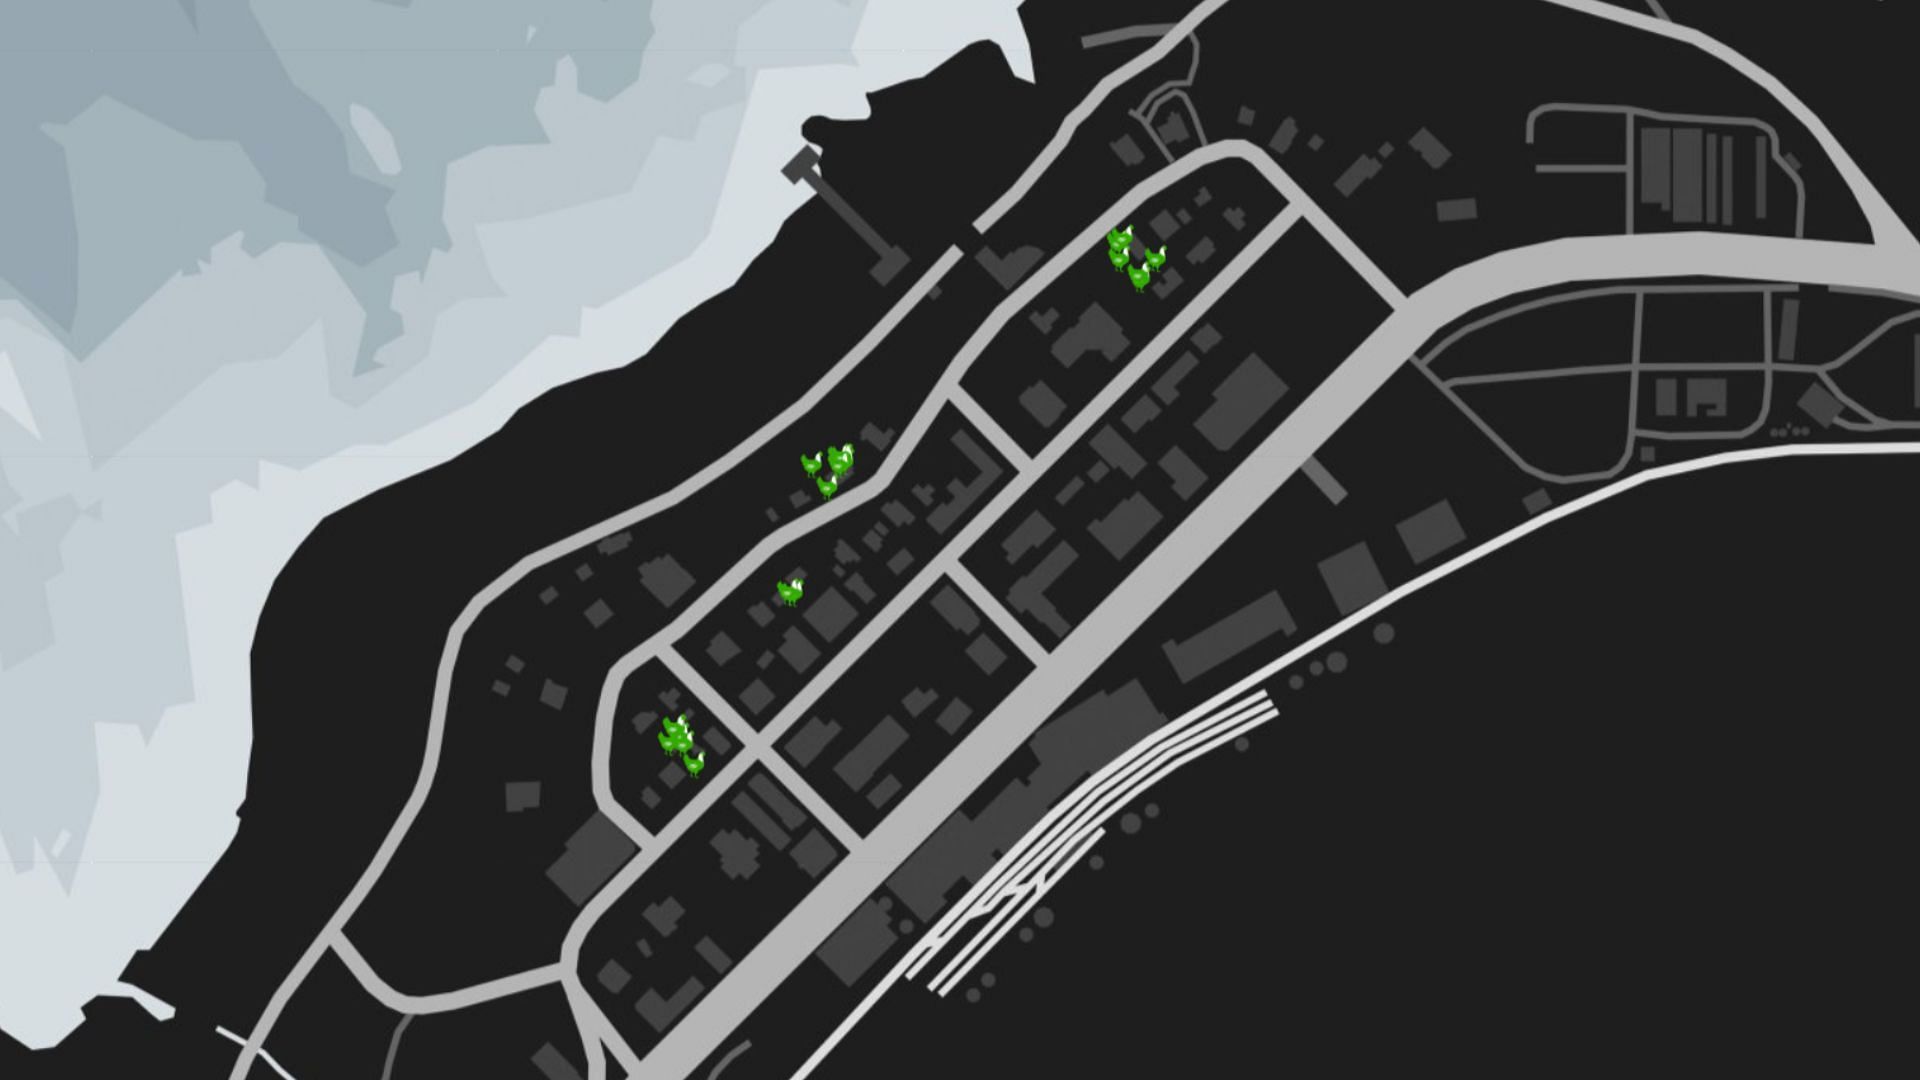 Grand Theft Auto Online Hen locations in Paleto Bay (Image via GTAWeb.eu)